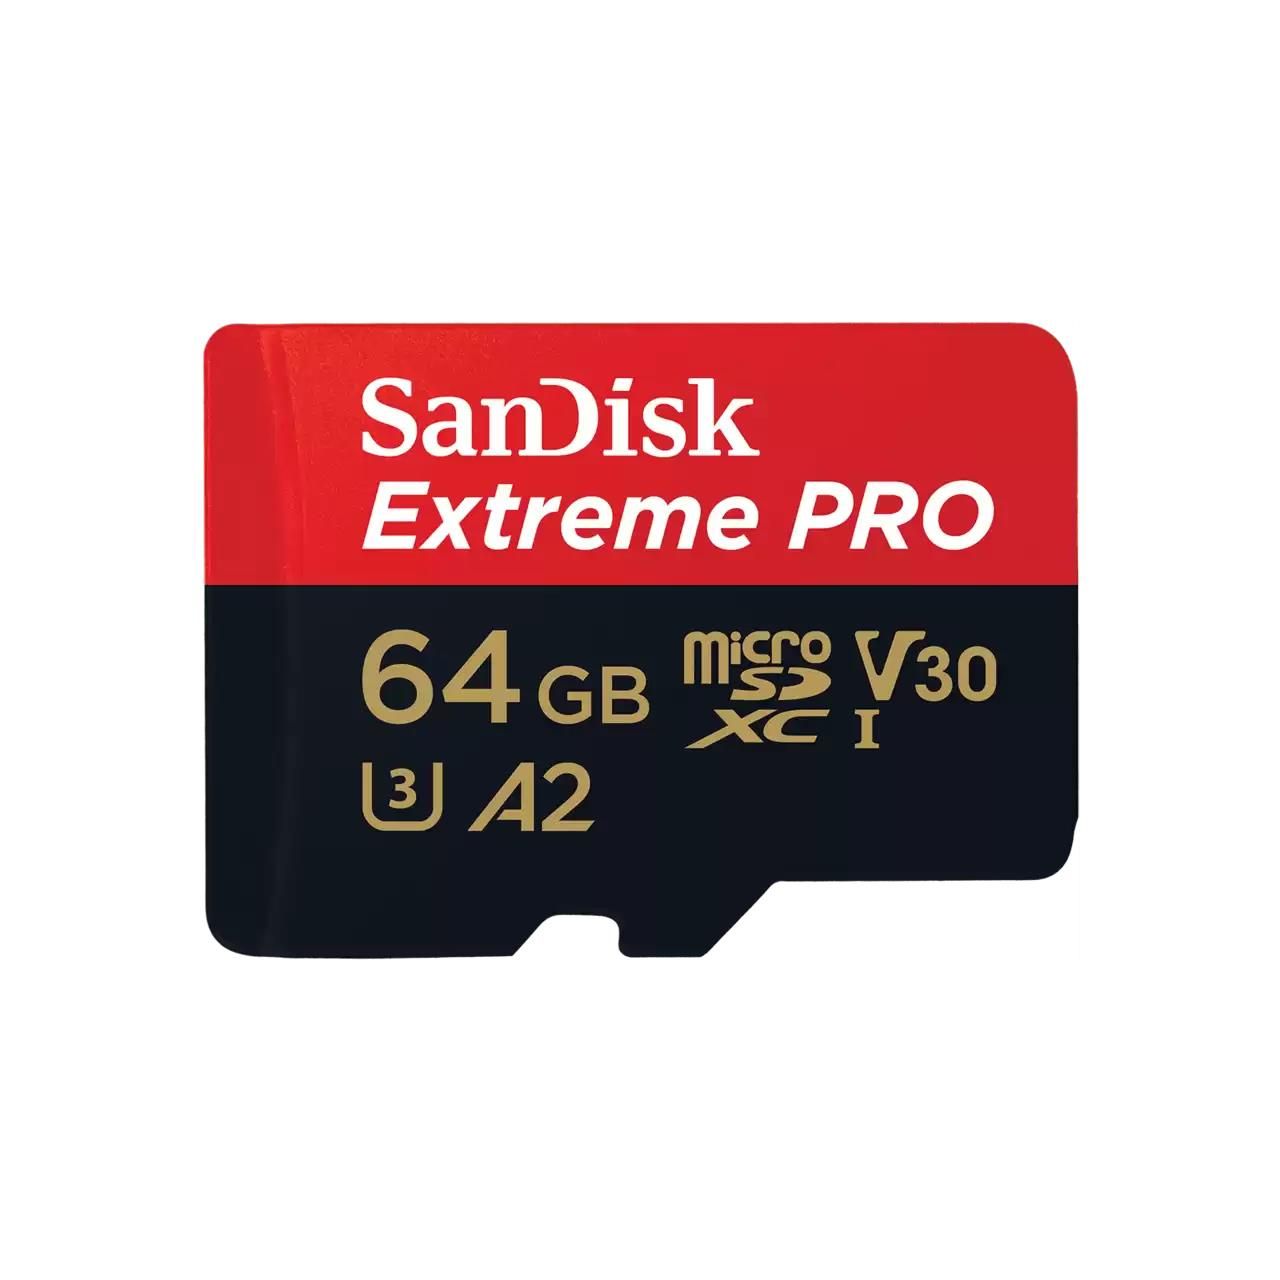 SanDisk Extreme PRO 64Gb